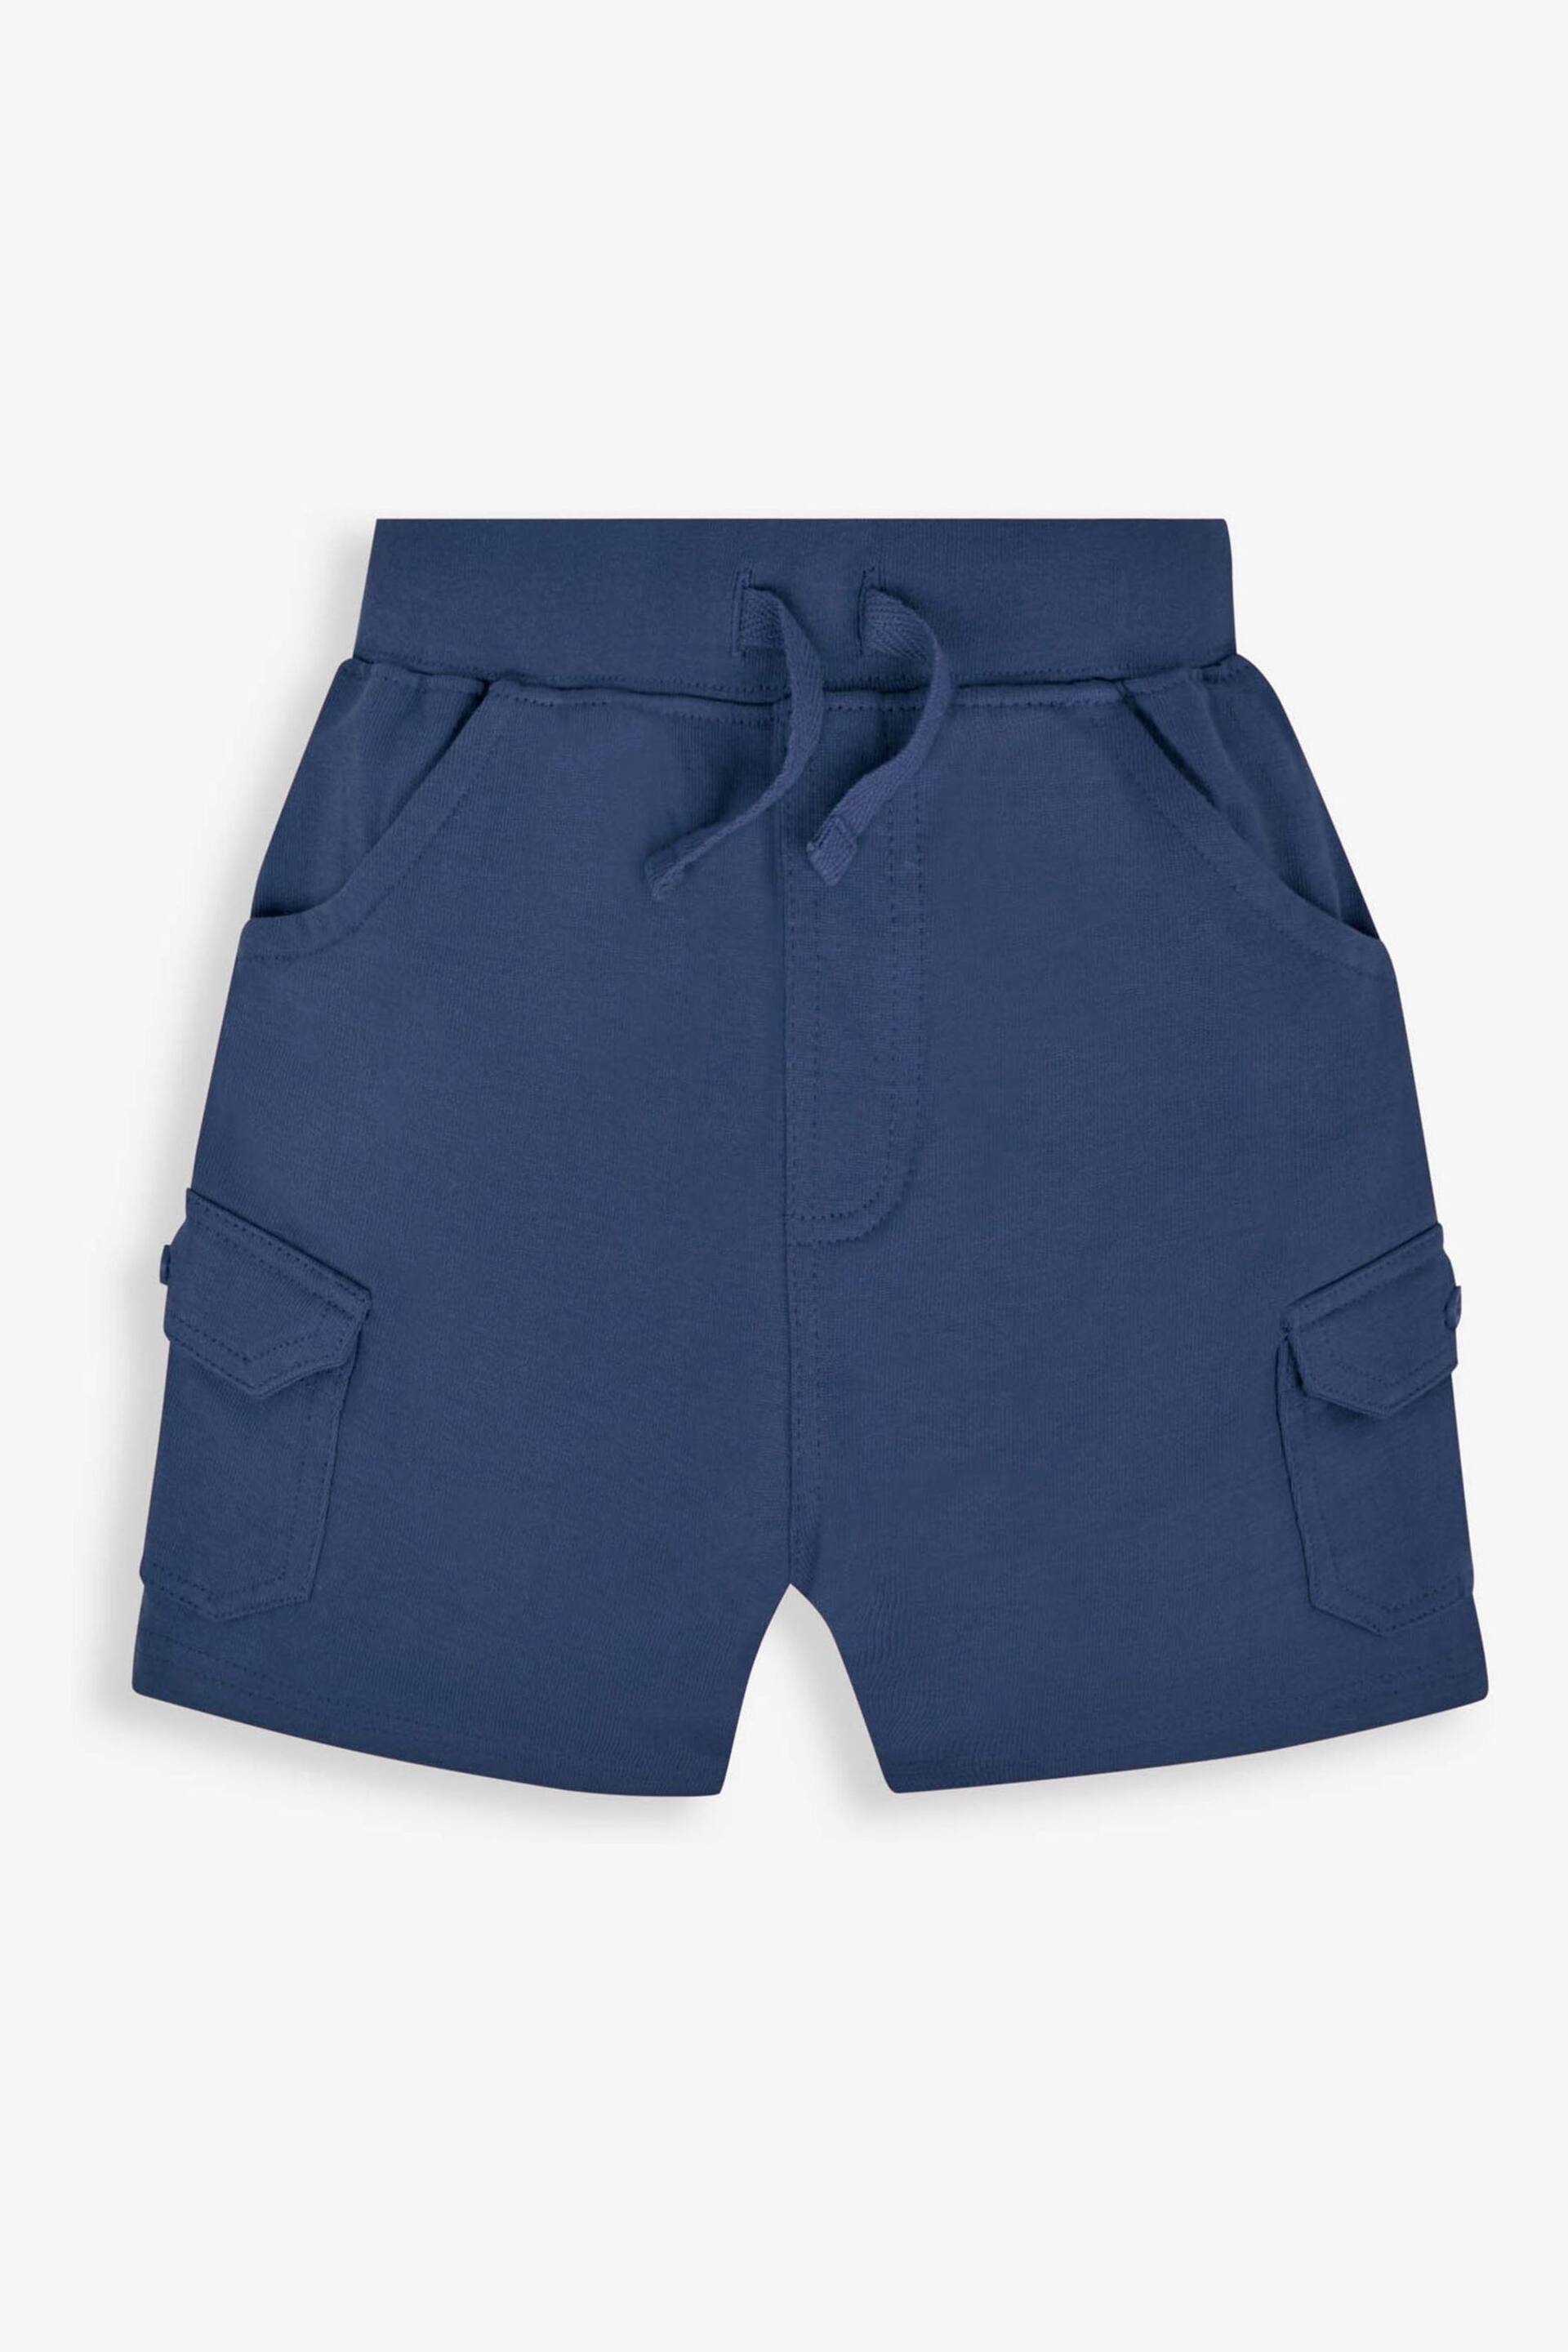 JoJo Maman Bébé Indigo Blue 2-Pack Jersey Cargo Shorts - Image 2 of 6